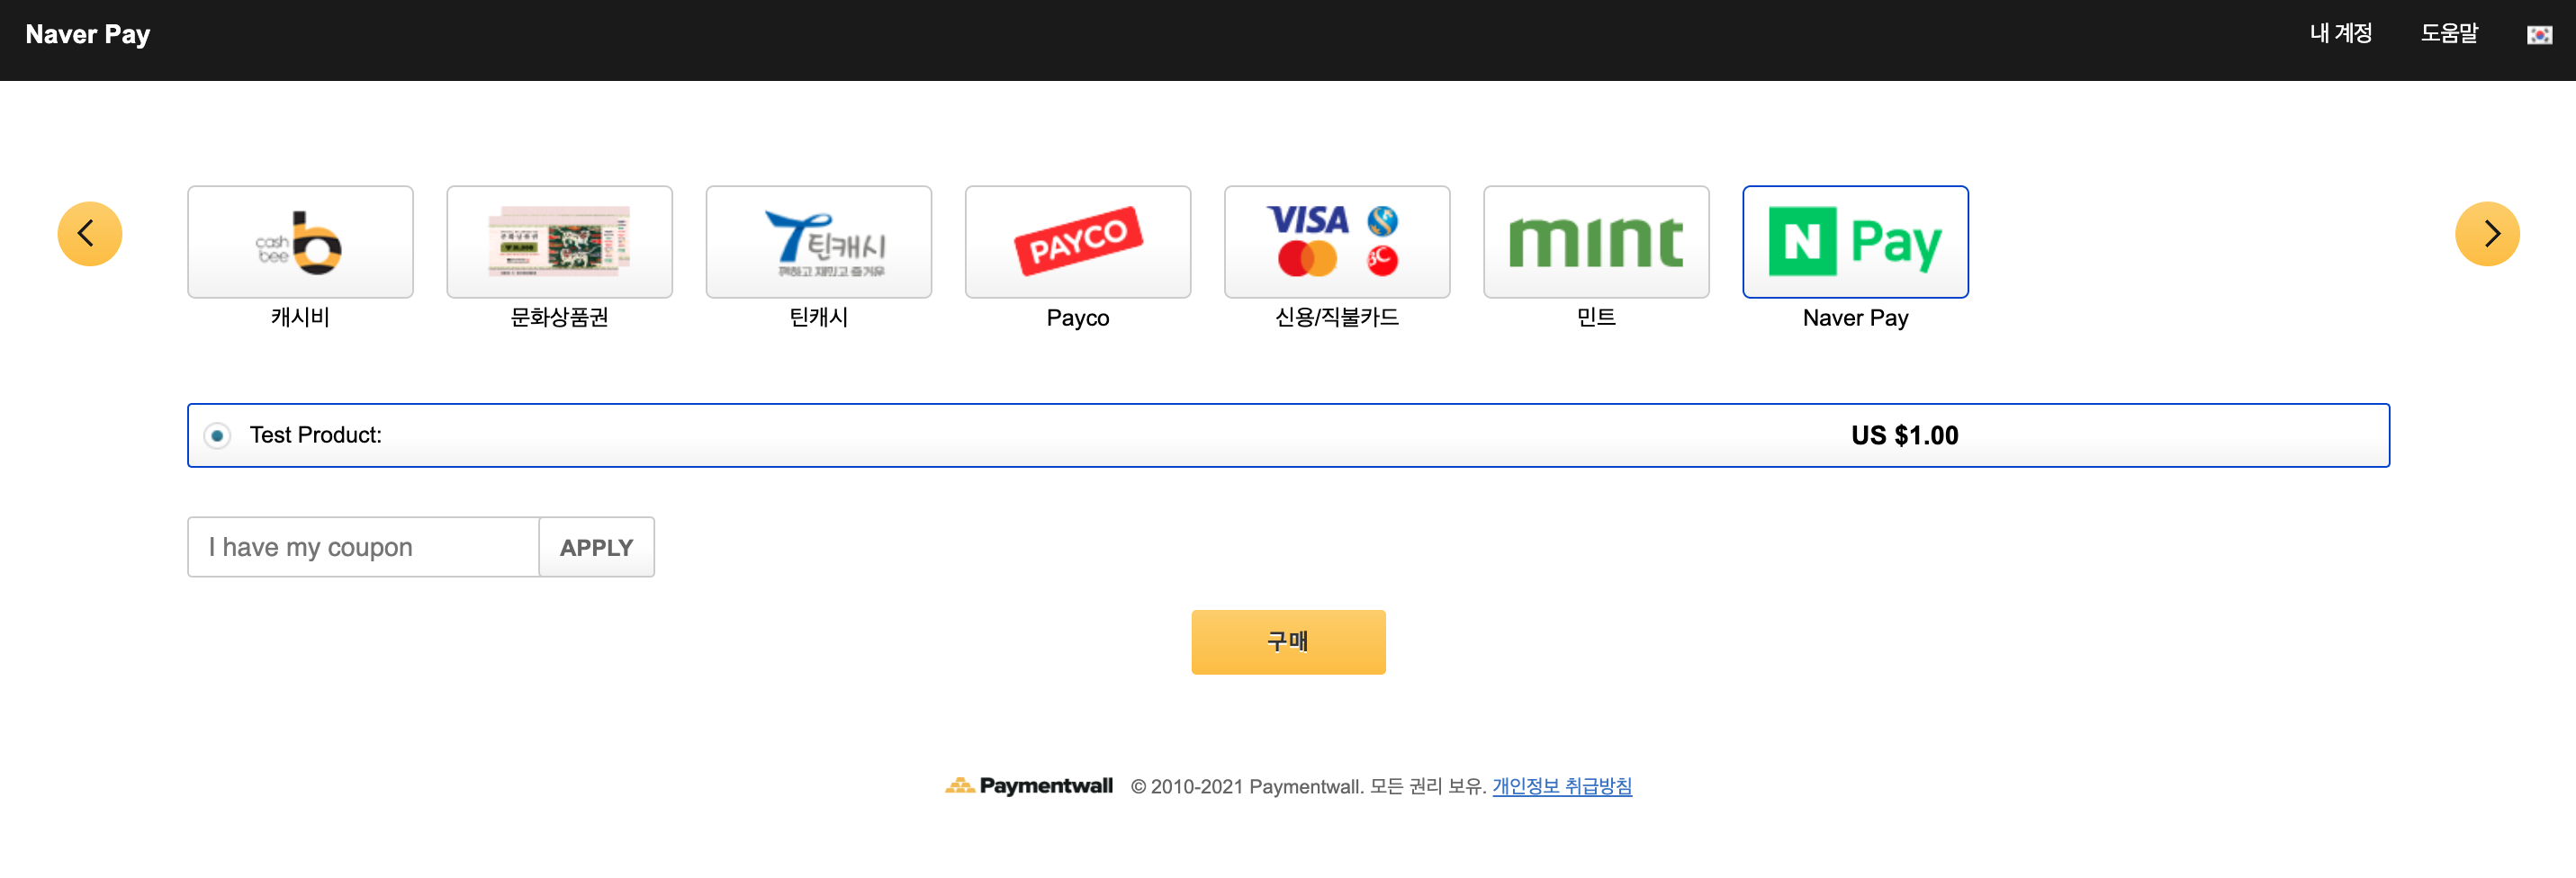 Naver Pay select